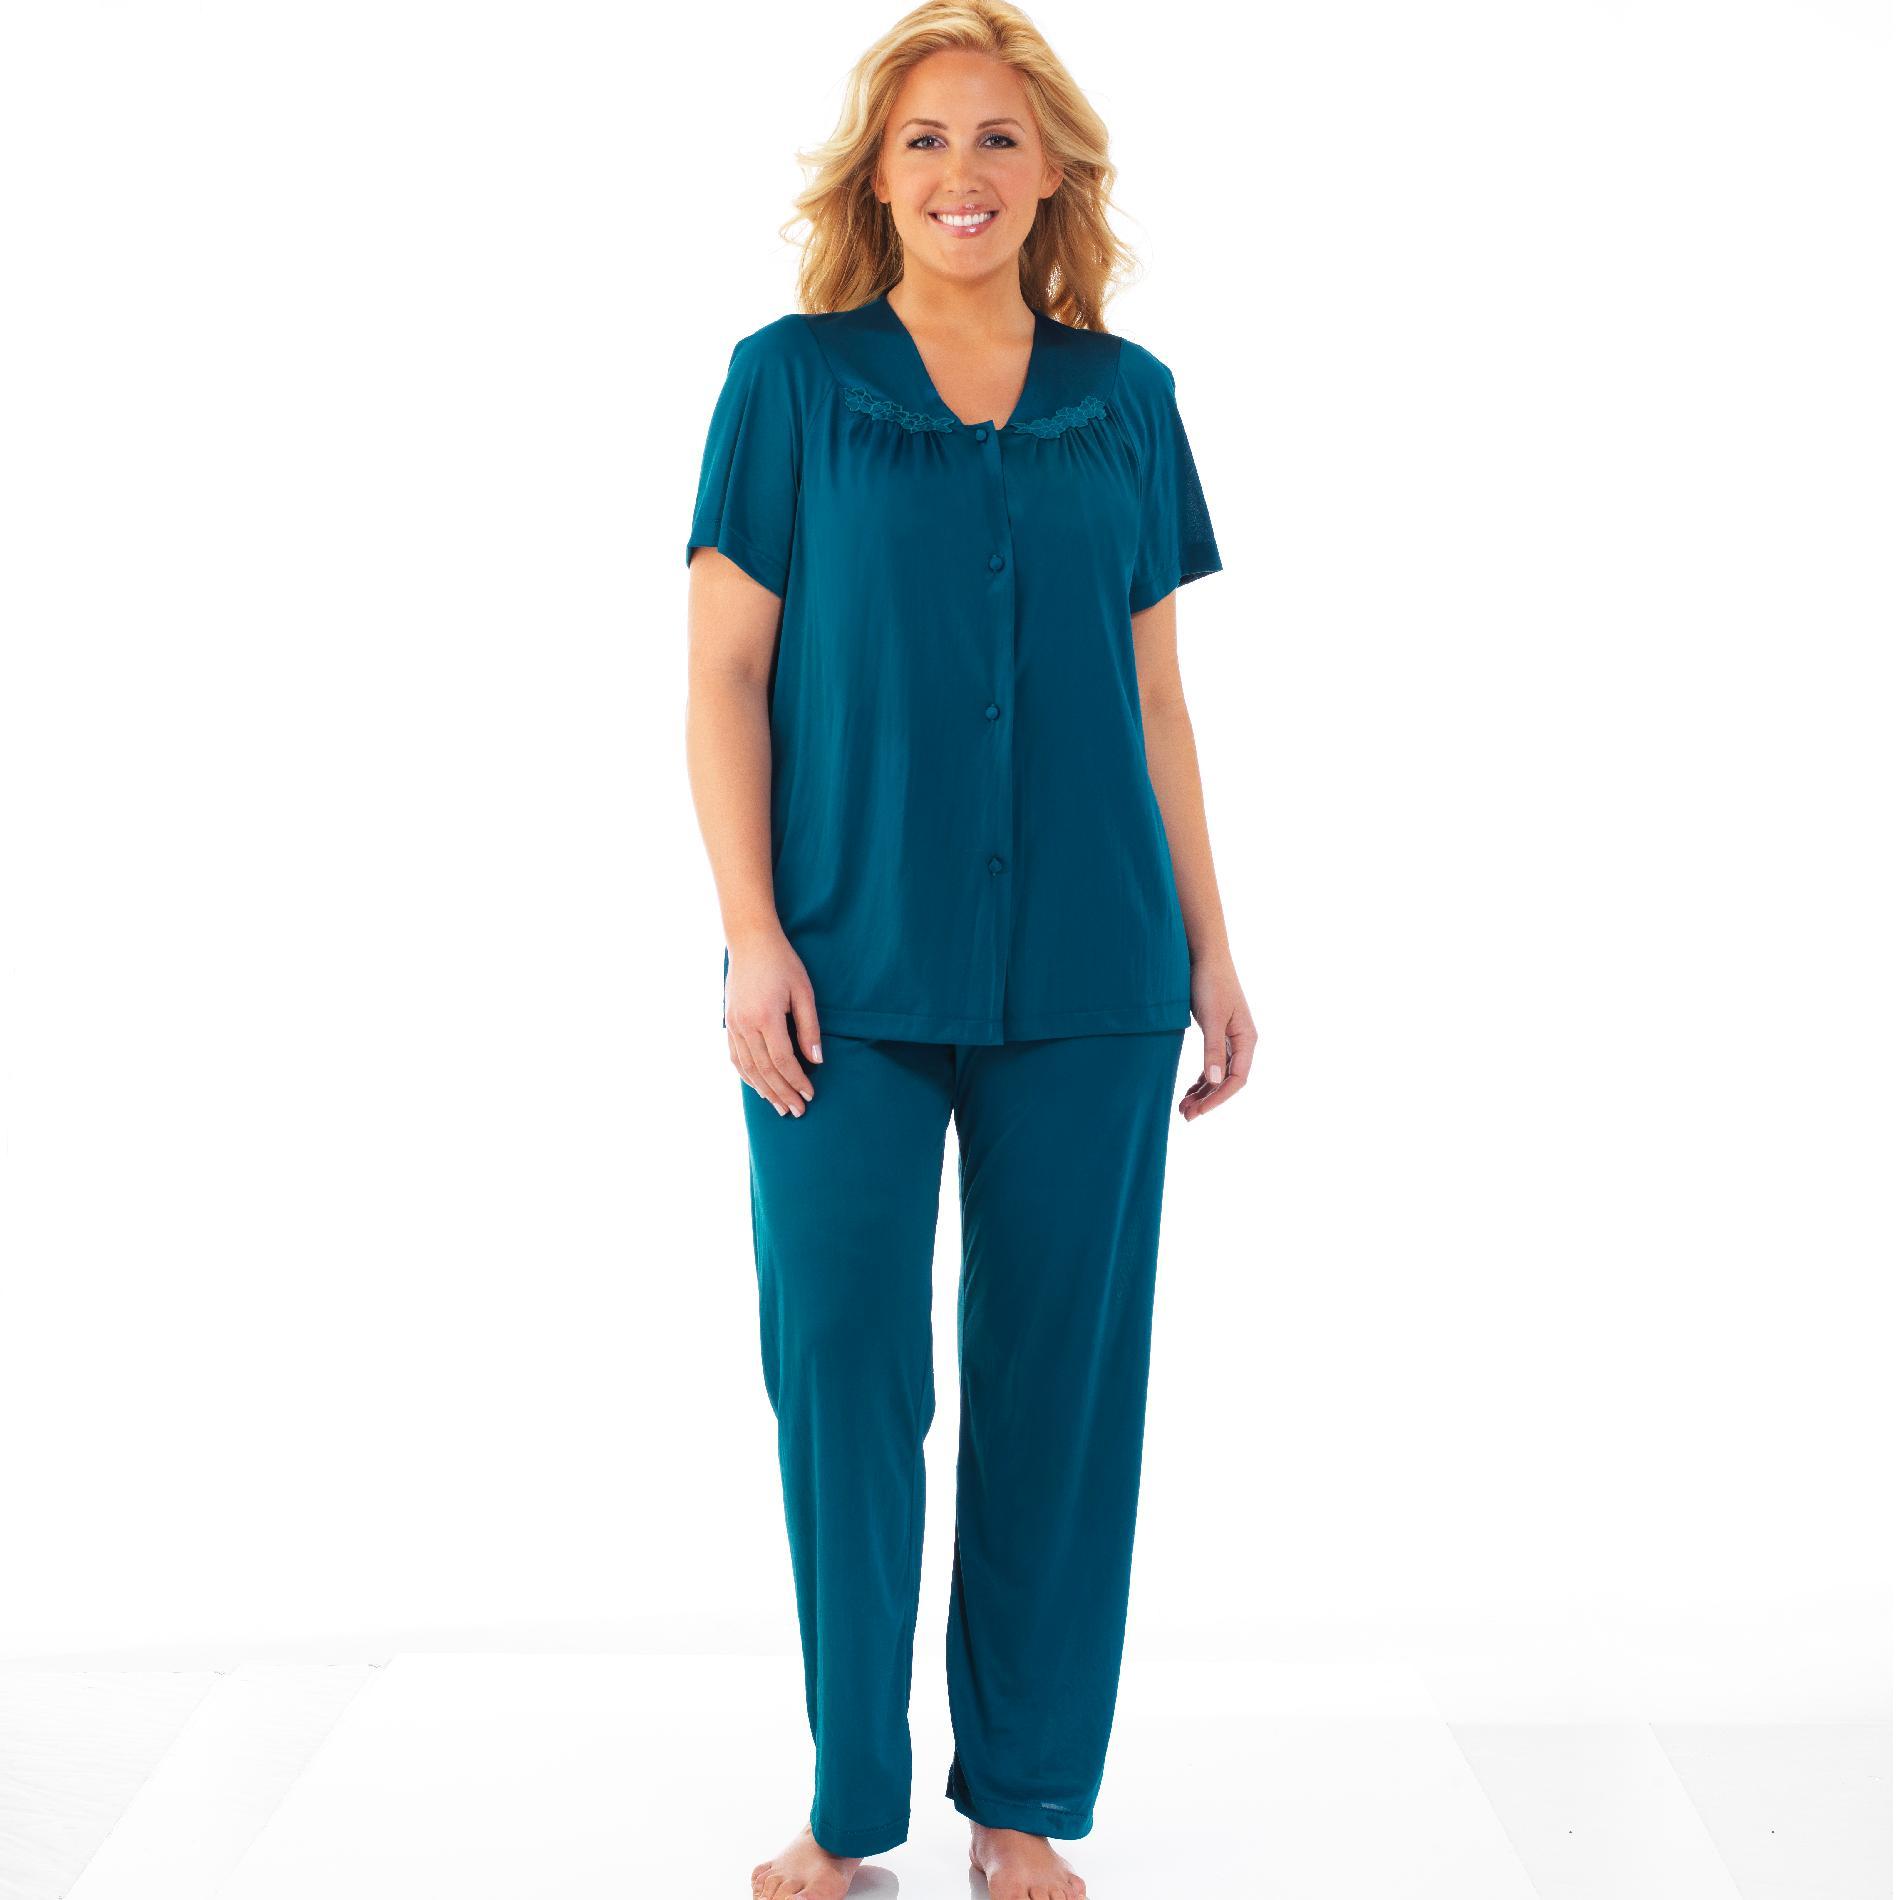 UPC 083623334257 product image for Women's Vanity Fair Colortura Short Sleeve Pajama Set | upcitemdb.com